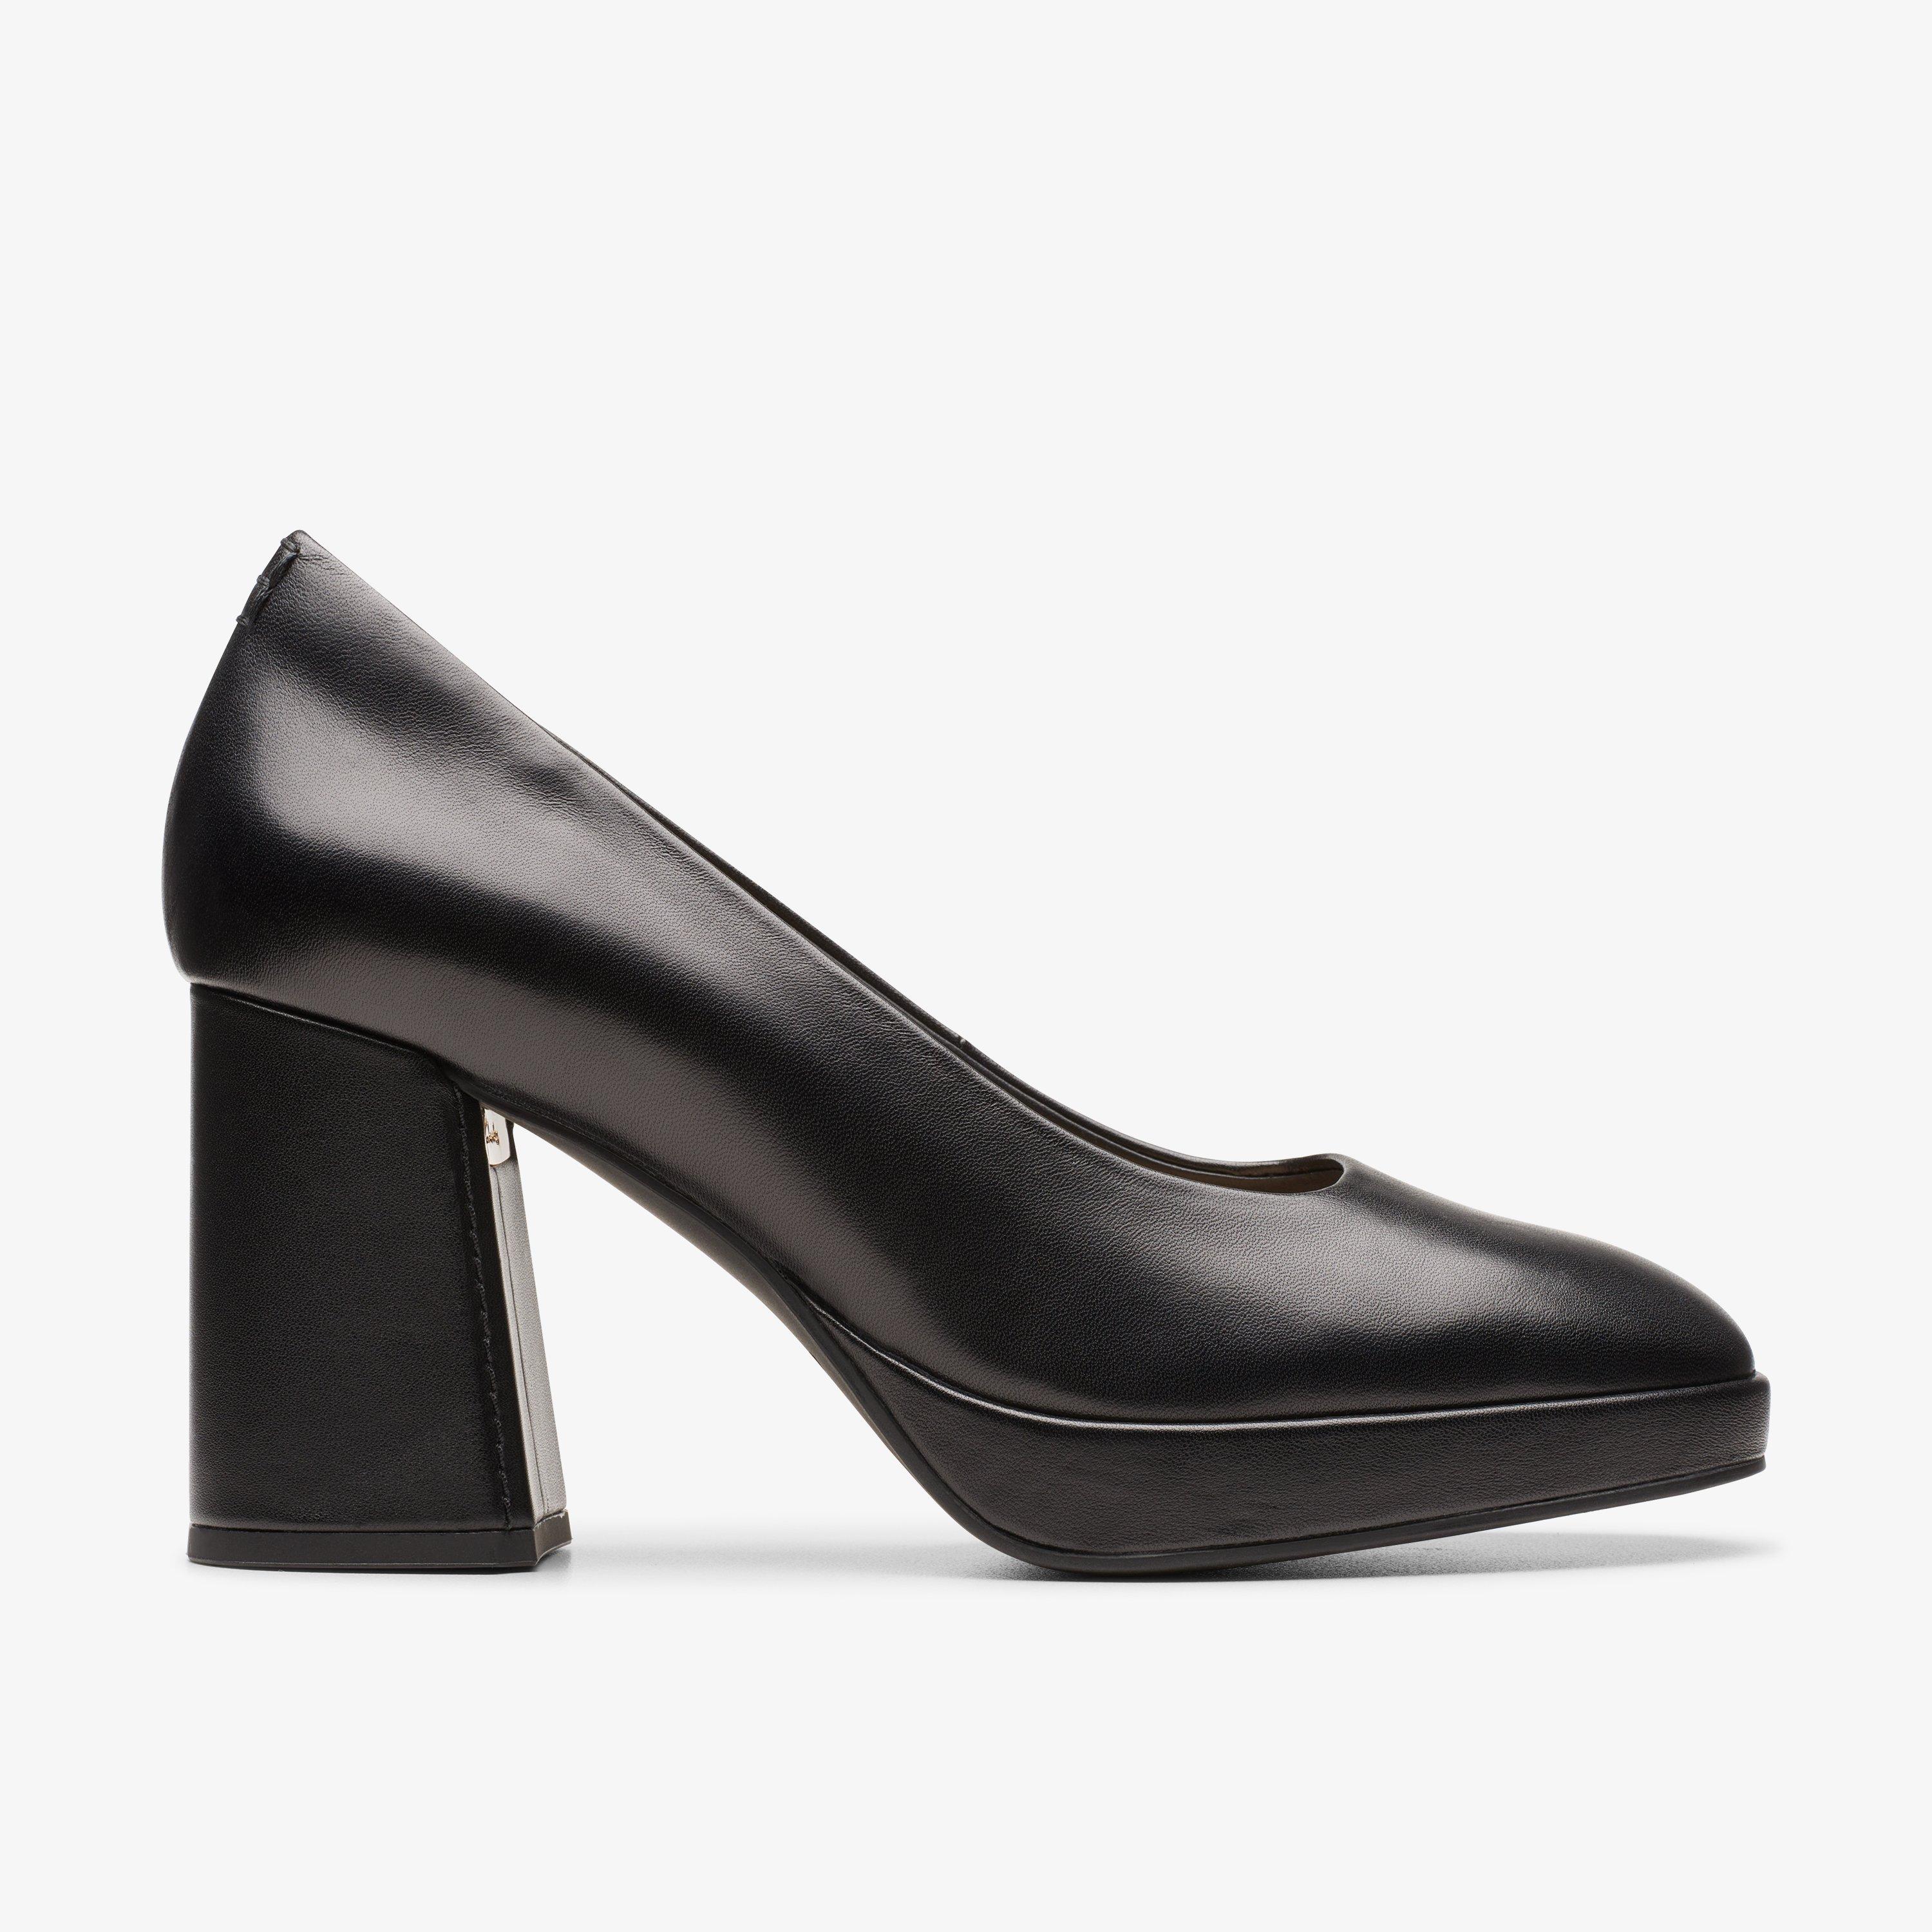 Leather court shoes Woman, Black